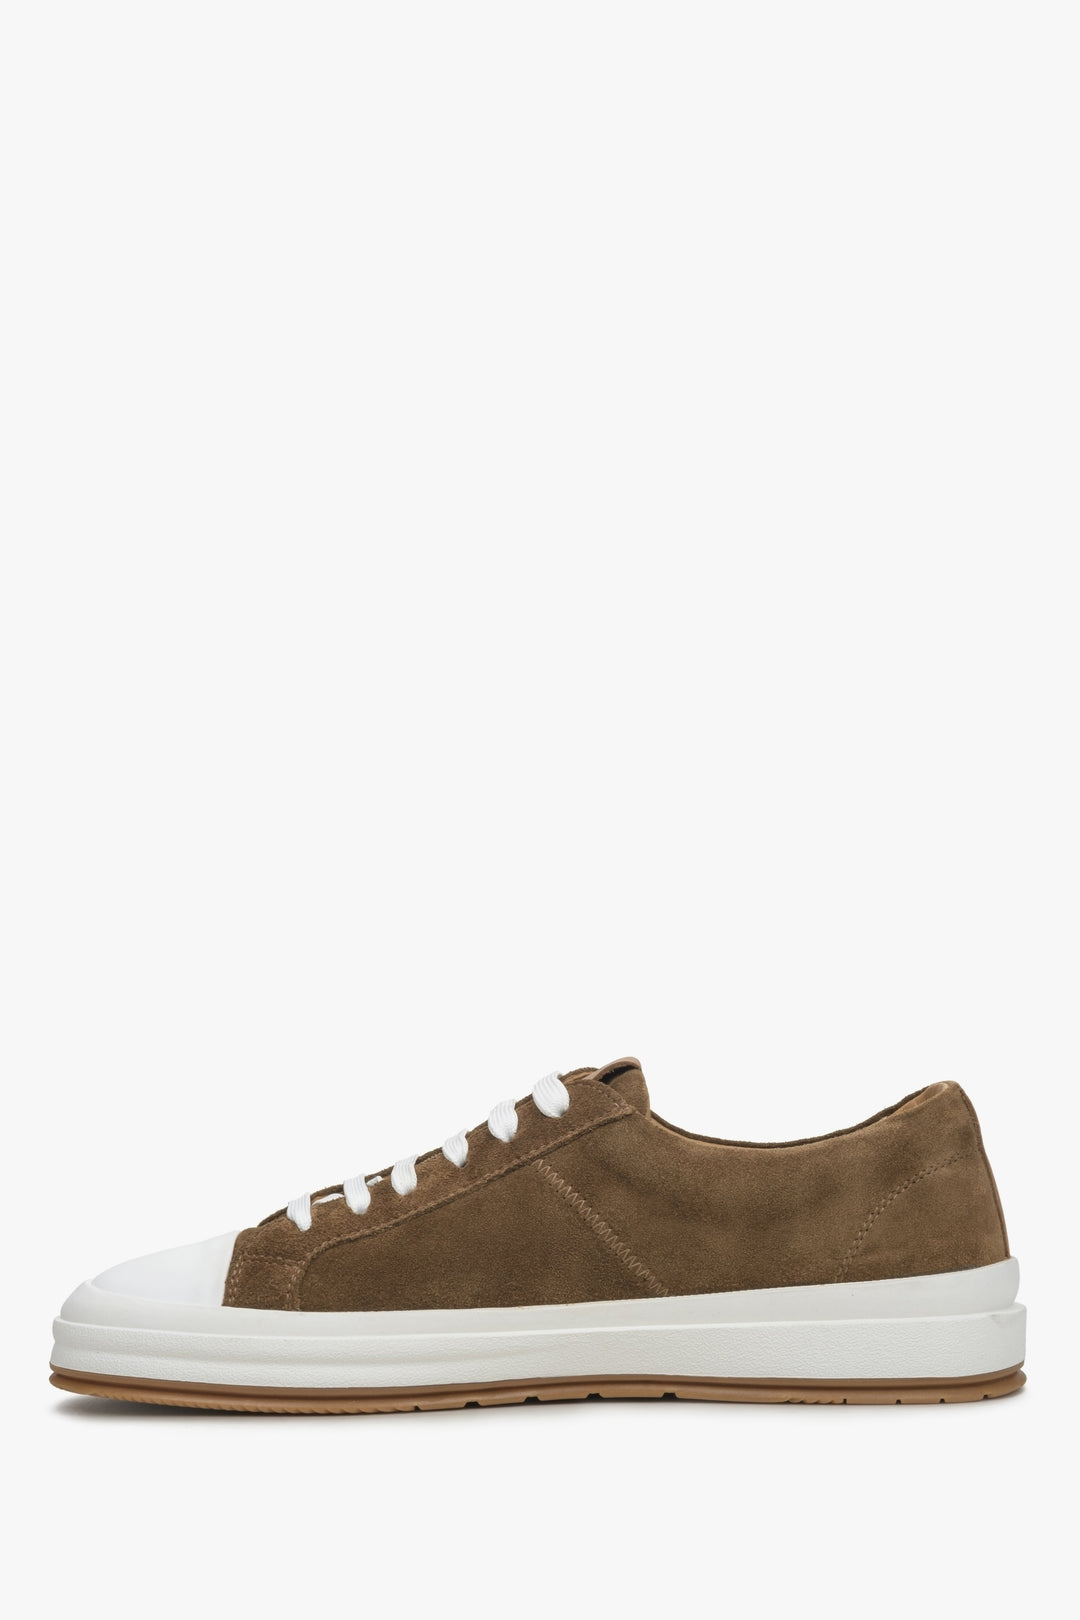 Men's brown velour sneakers by Estro - shoe profile.